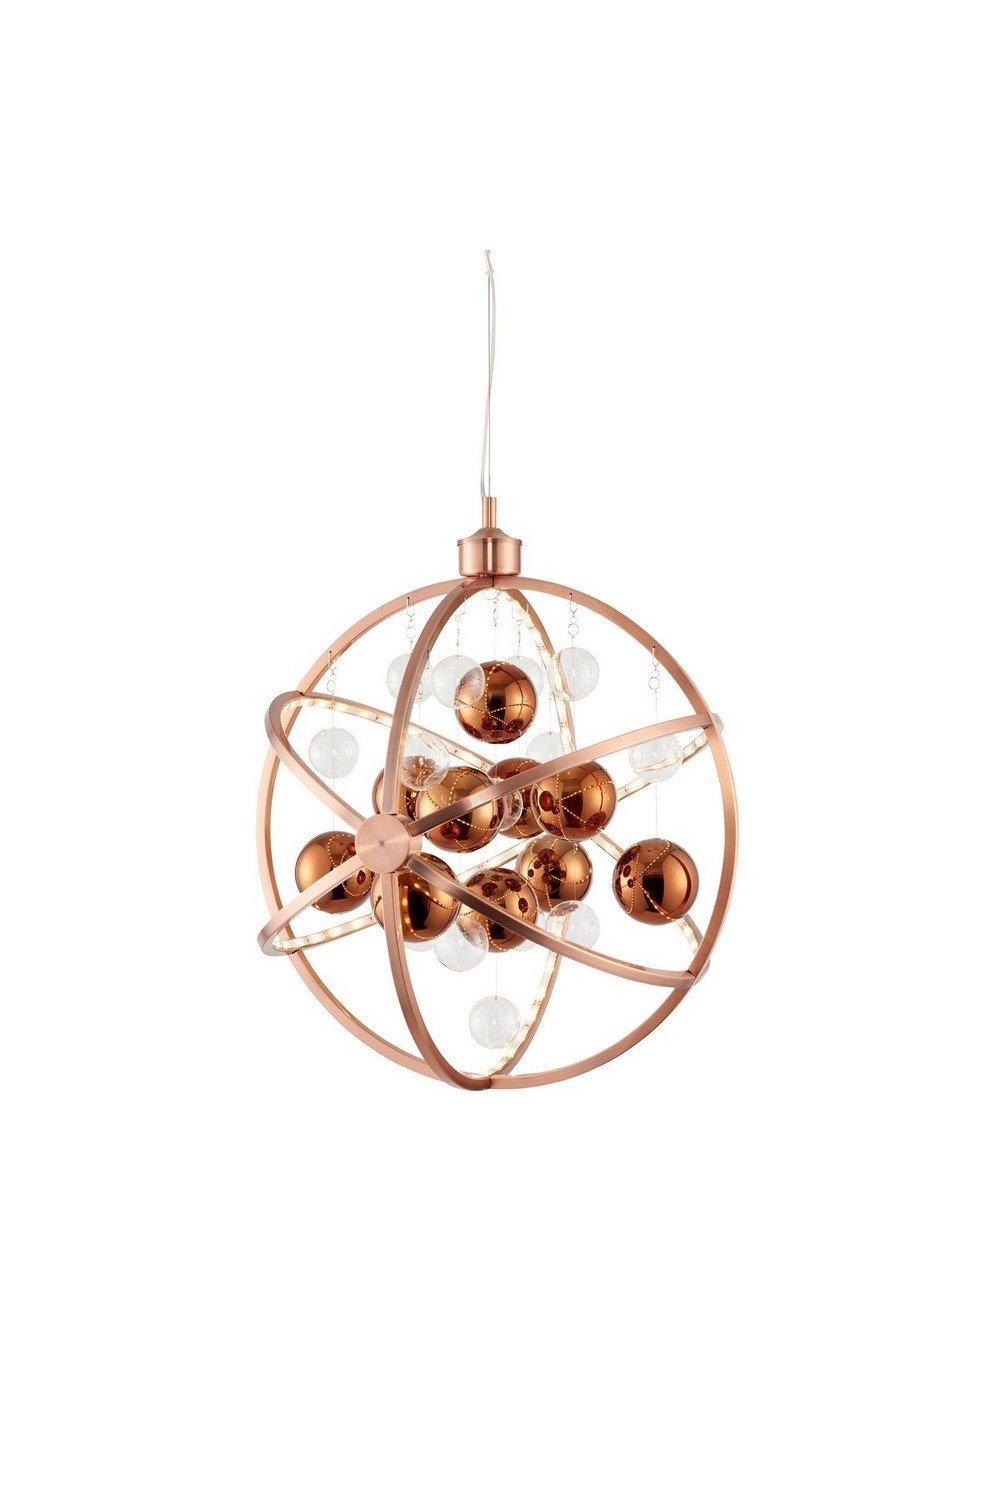 Muni Spherical Ceiling Pendant Light with Copper Balls